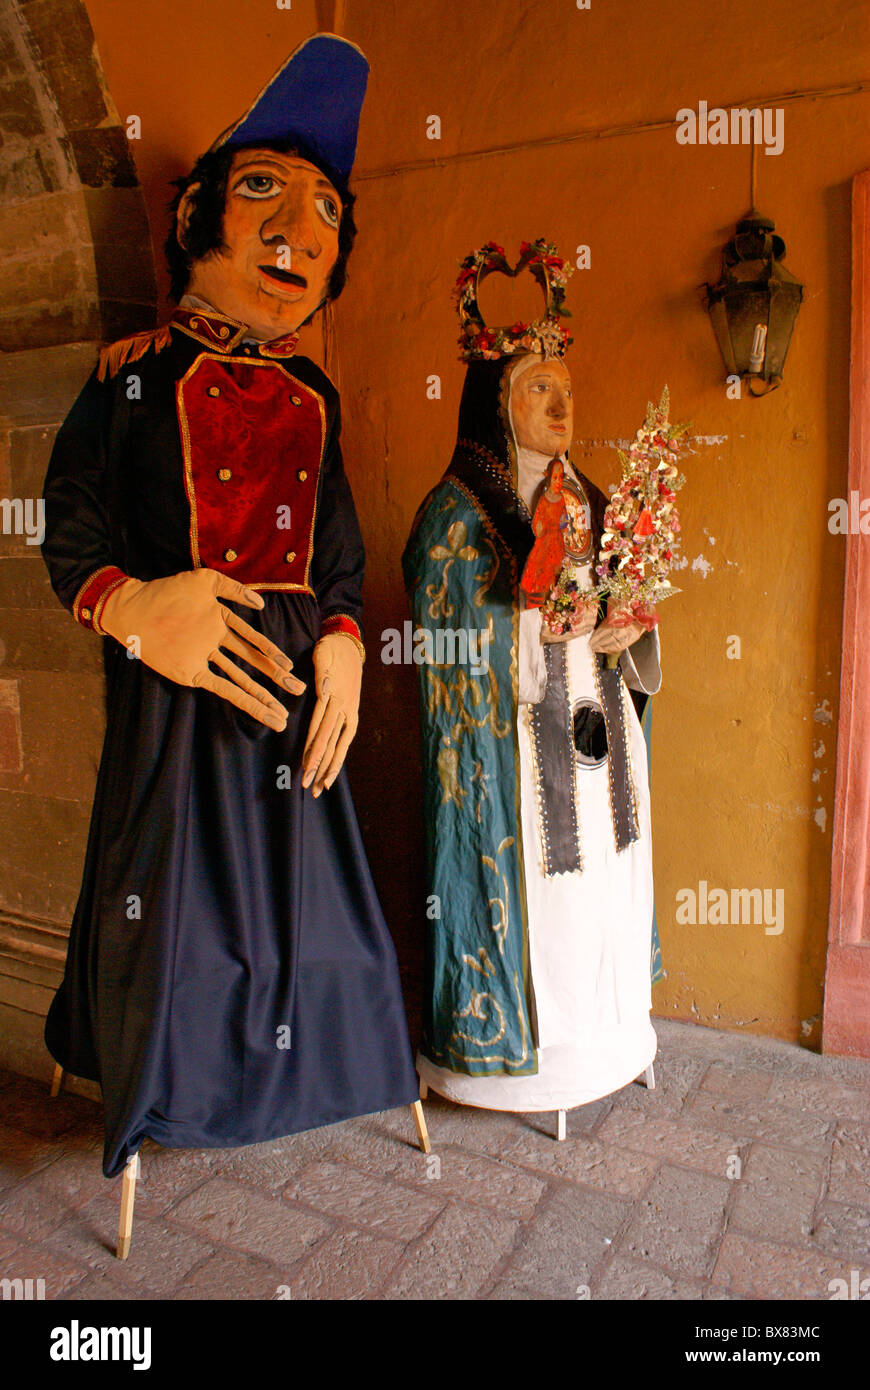 Mojigangas,giant papier mache puppets in the Bellas Artes, San Miguel de Allende, Mexico. Stock Photo